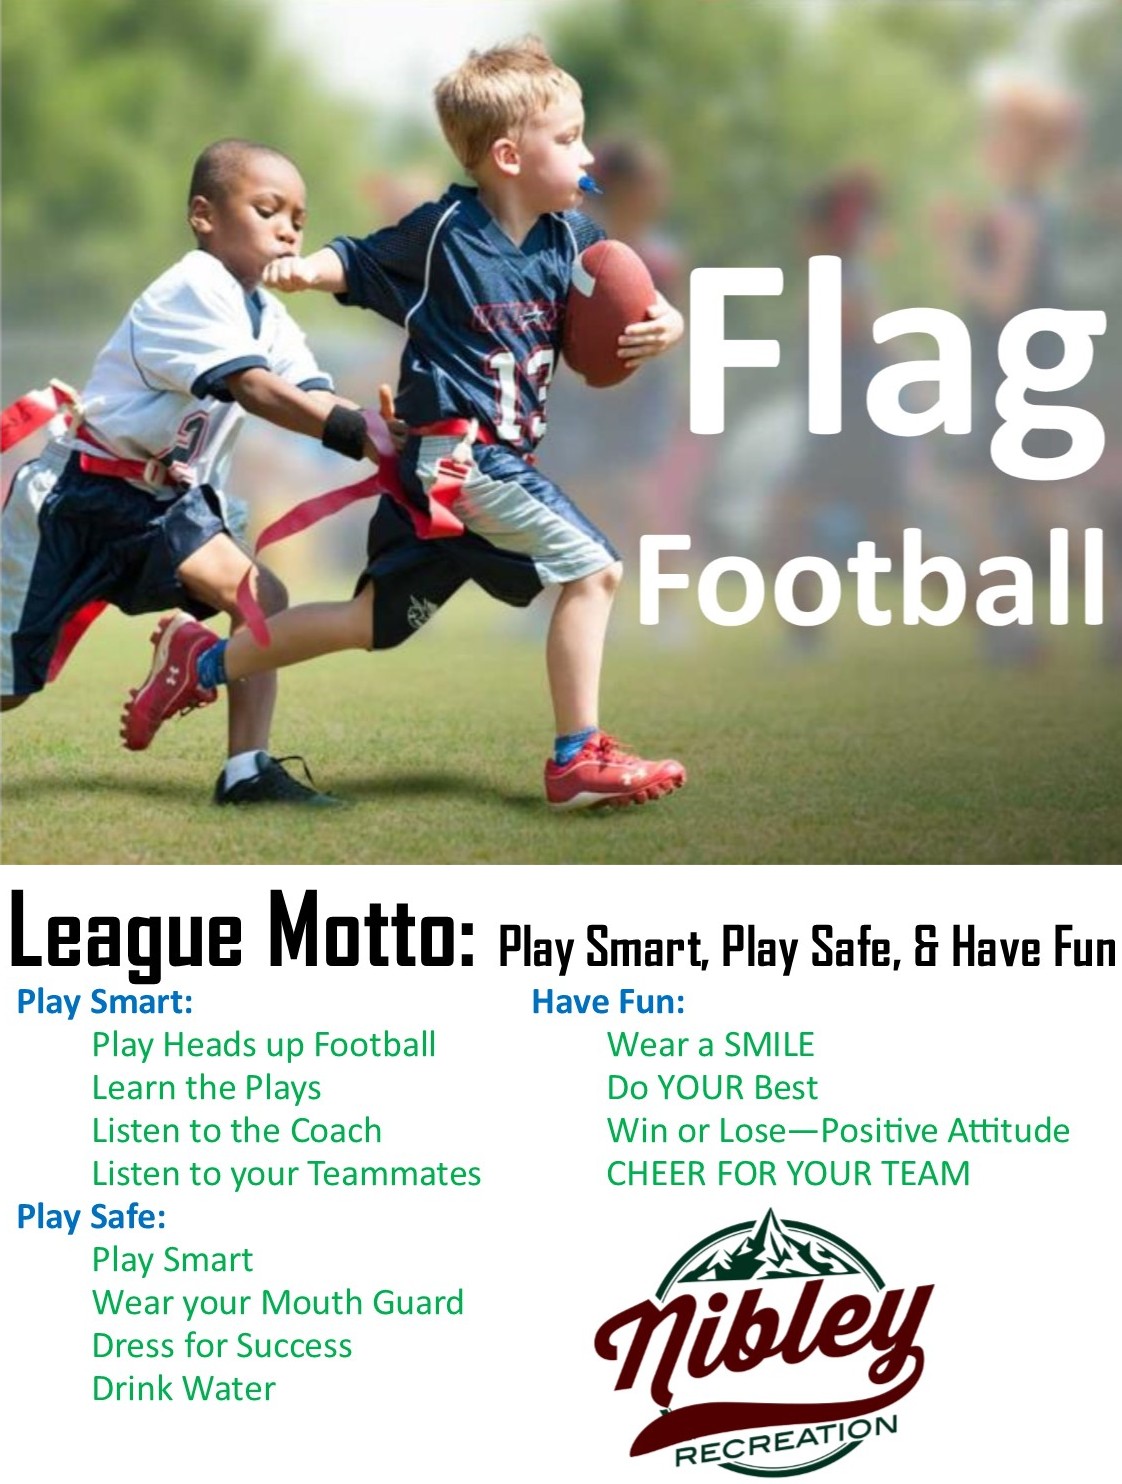 2019 Flag Football League Motto Details